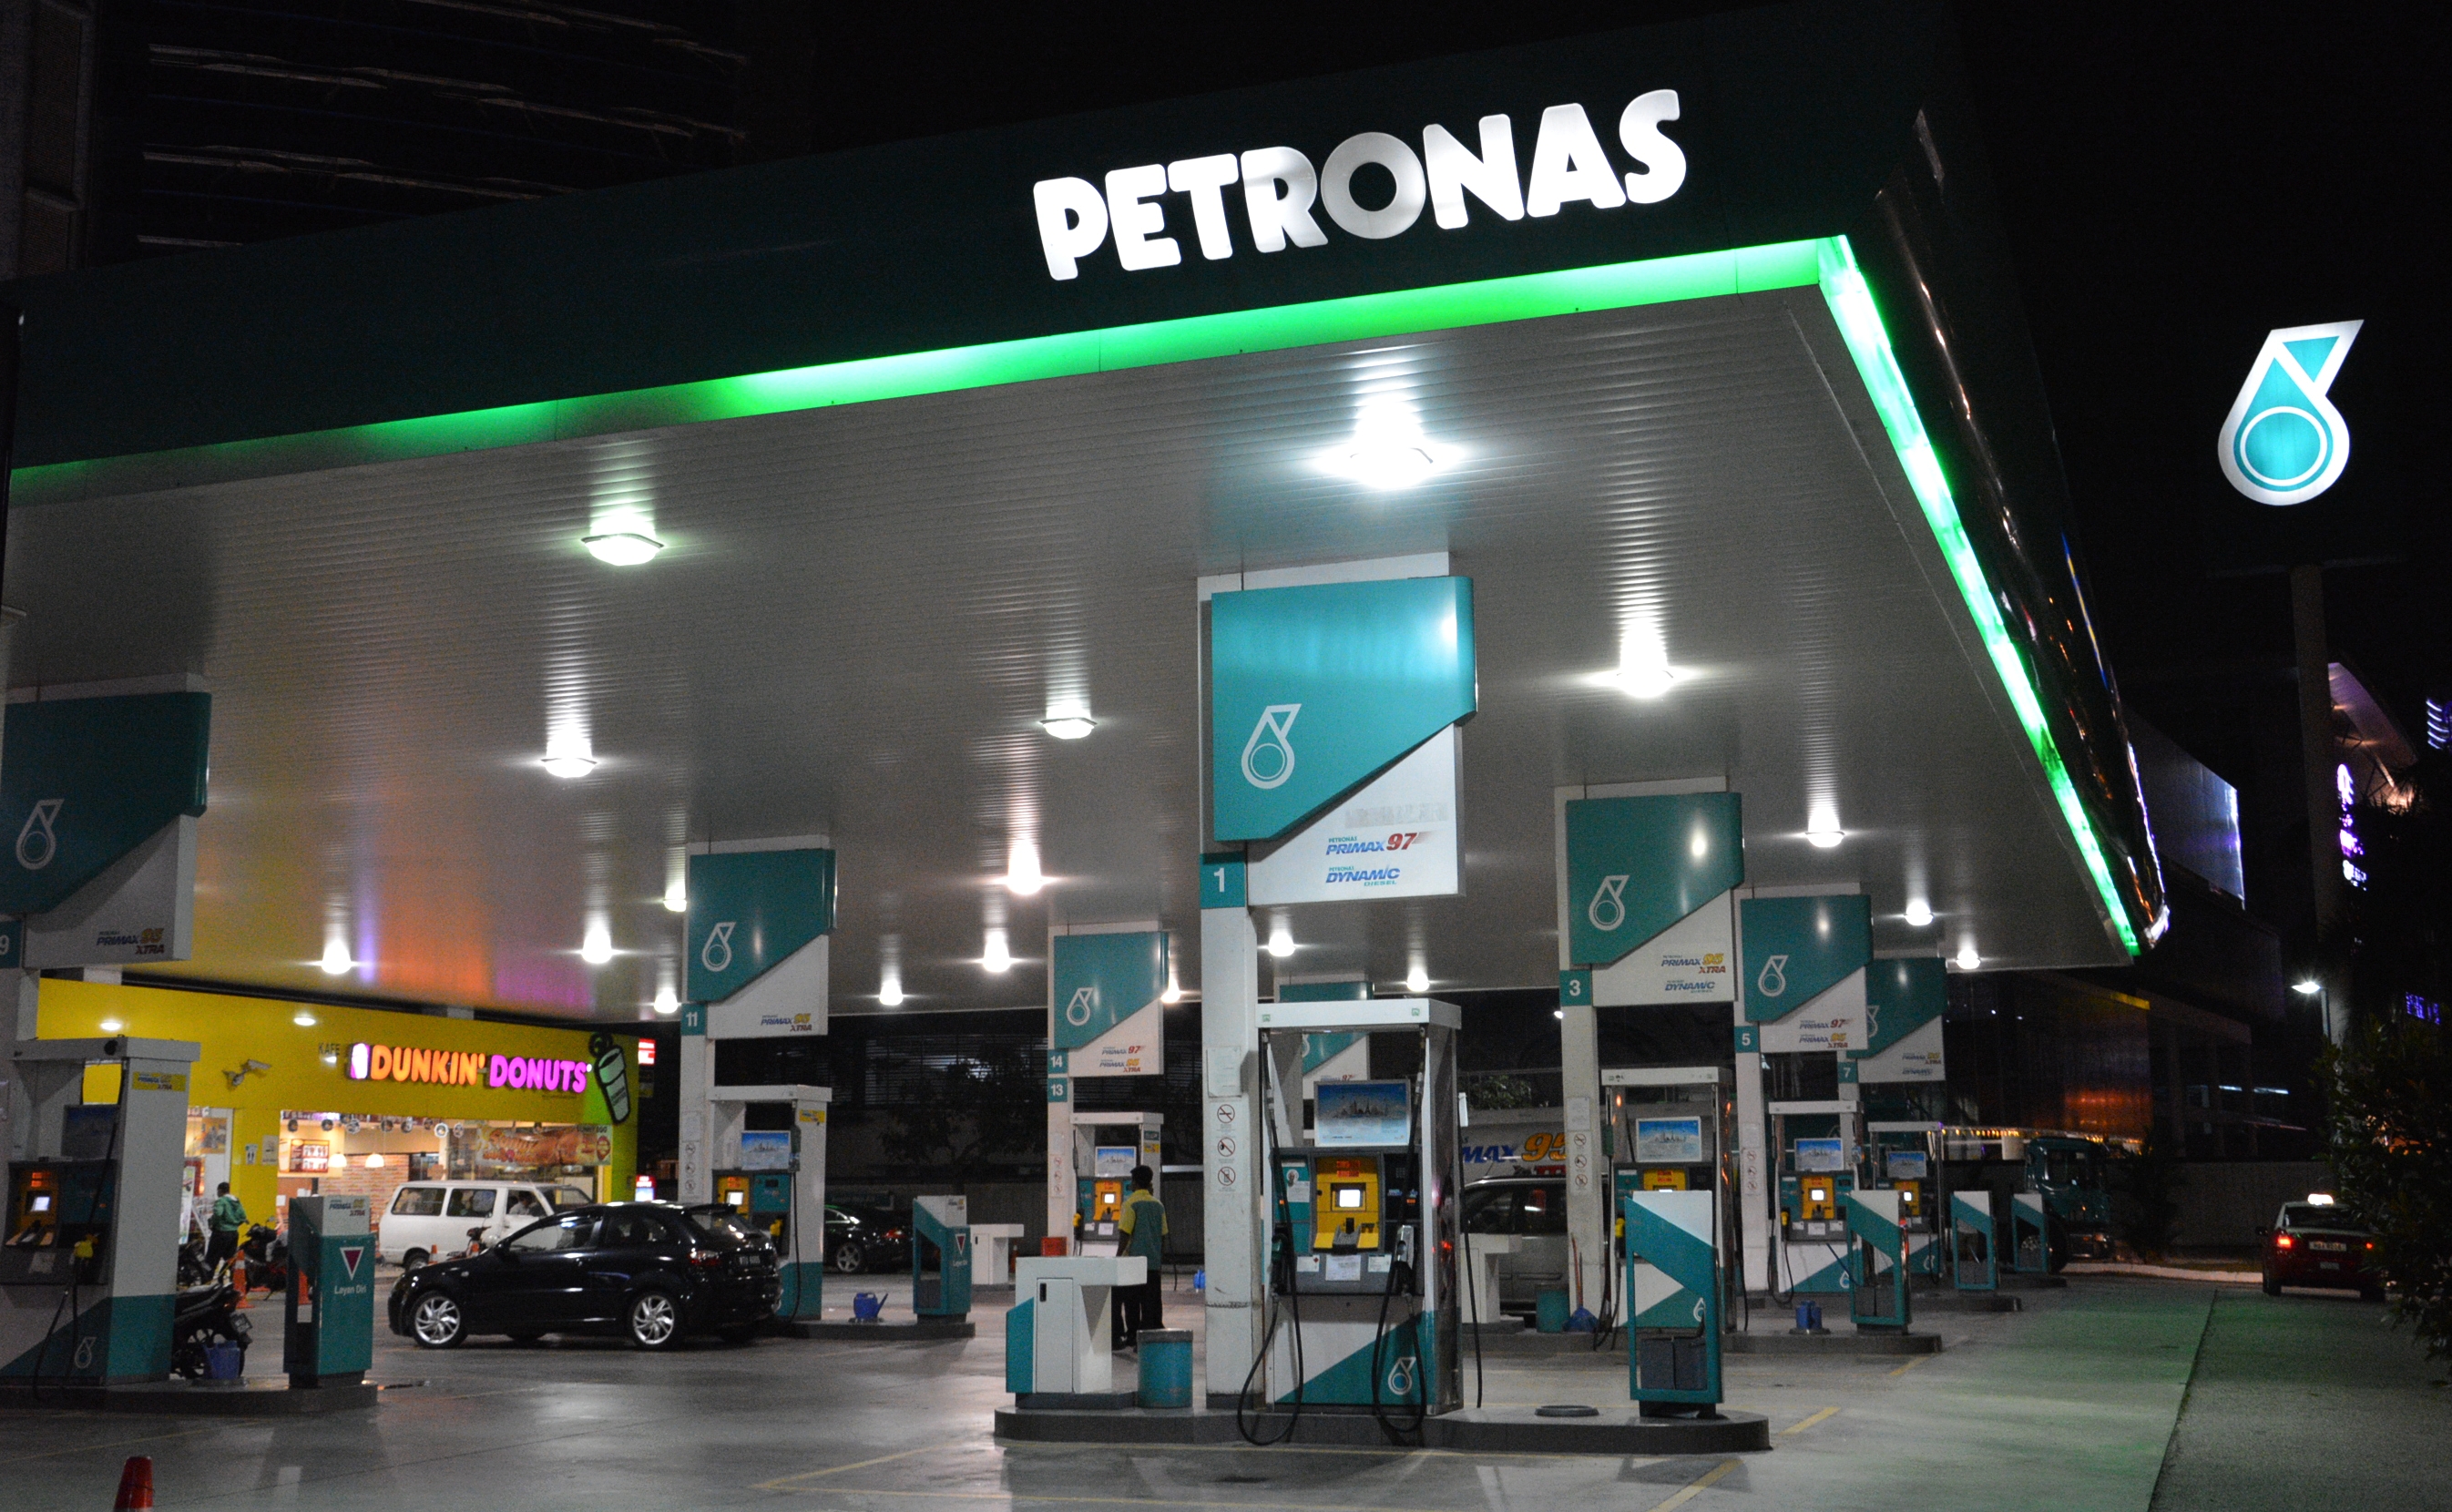 Petronas station near me